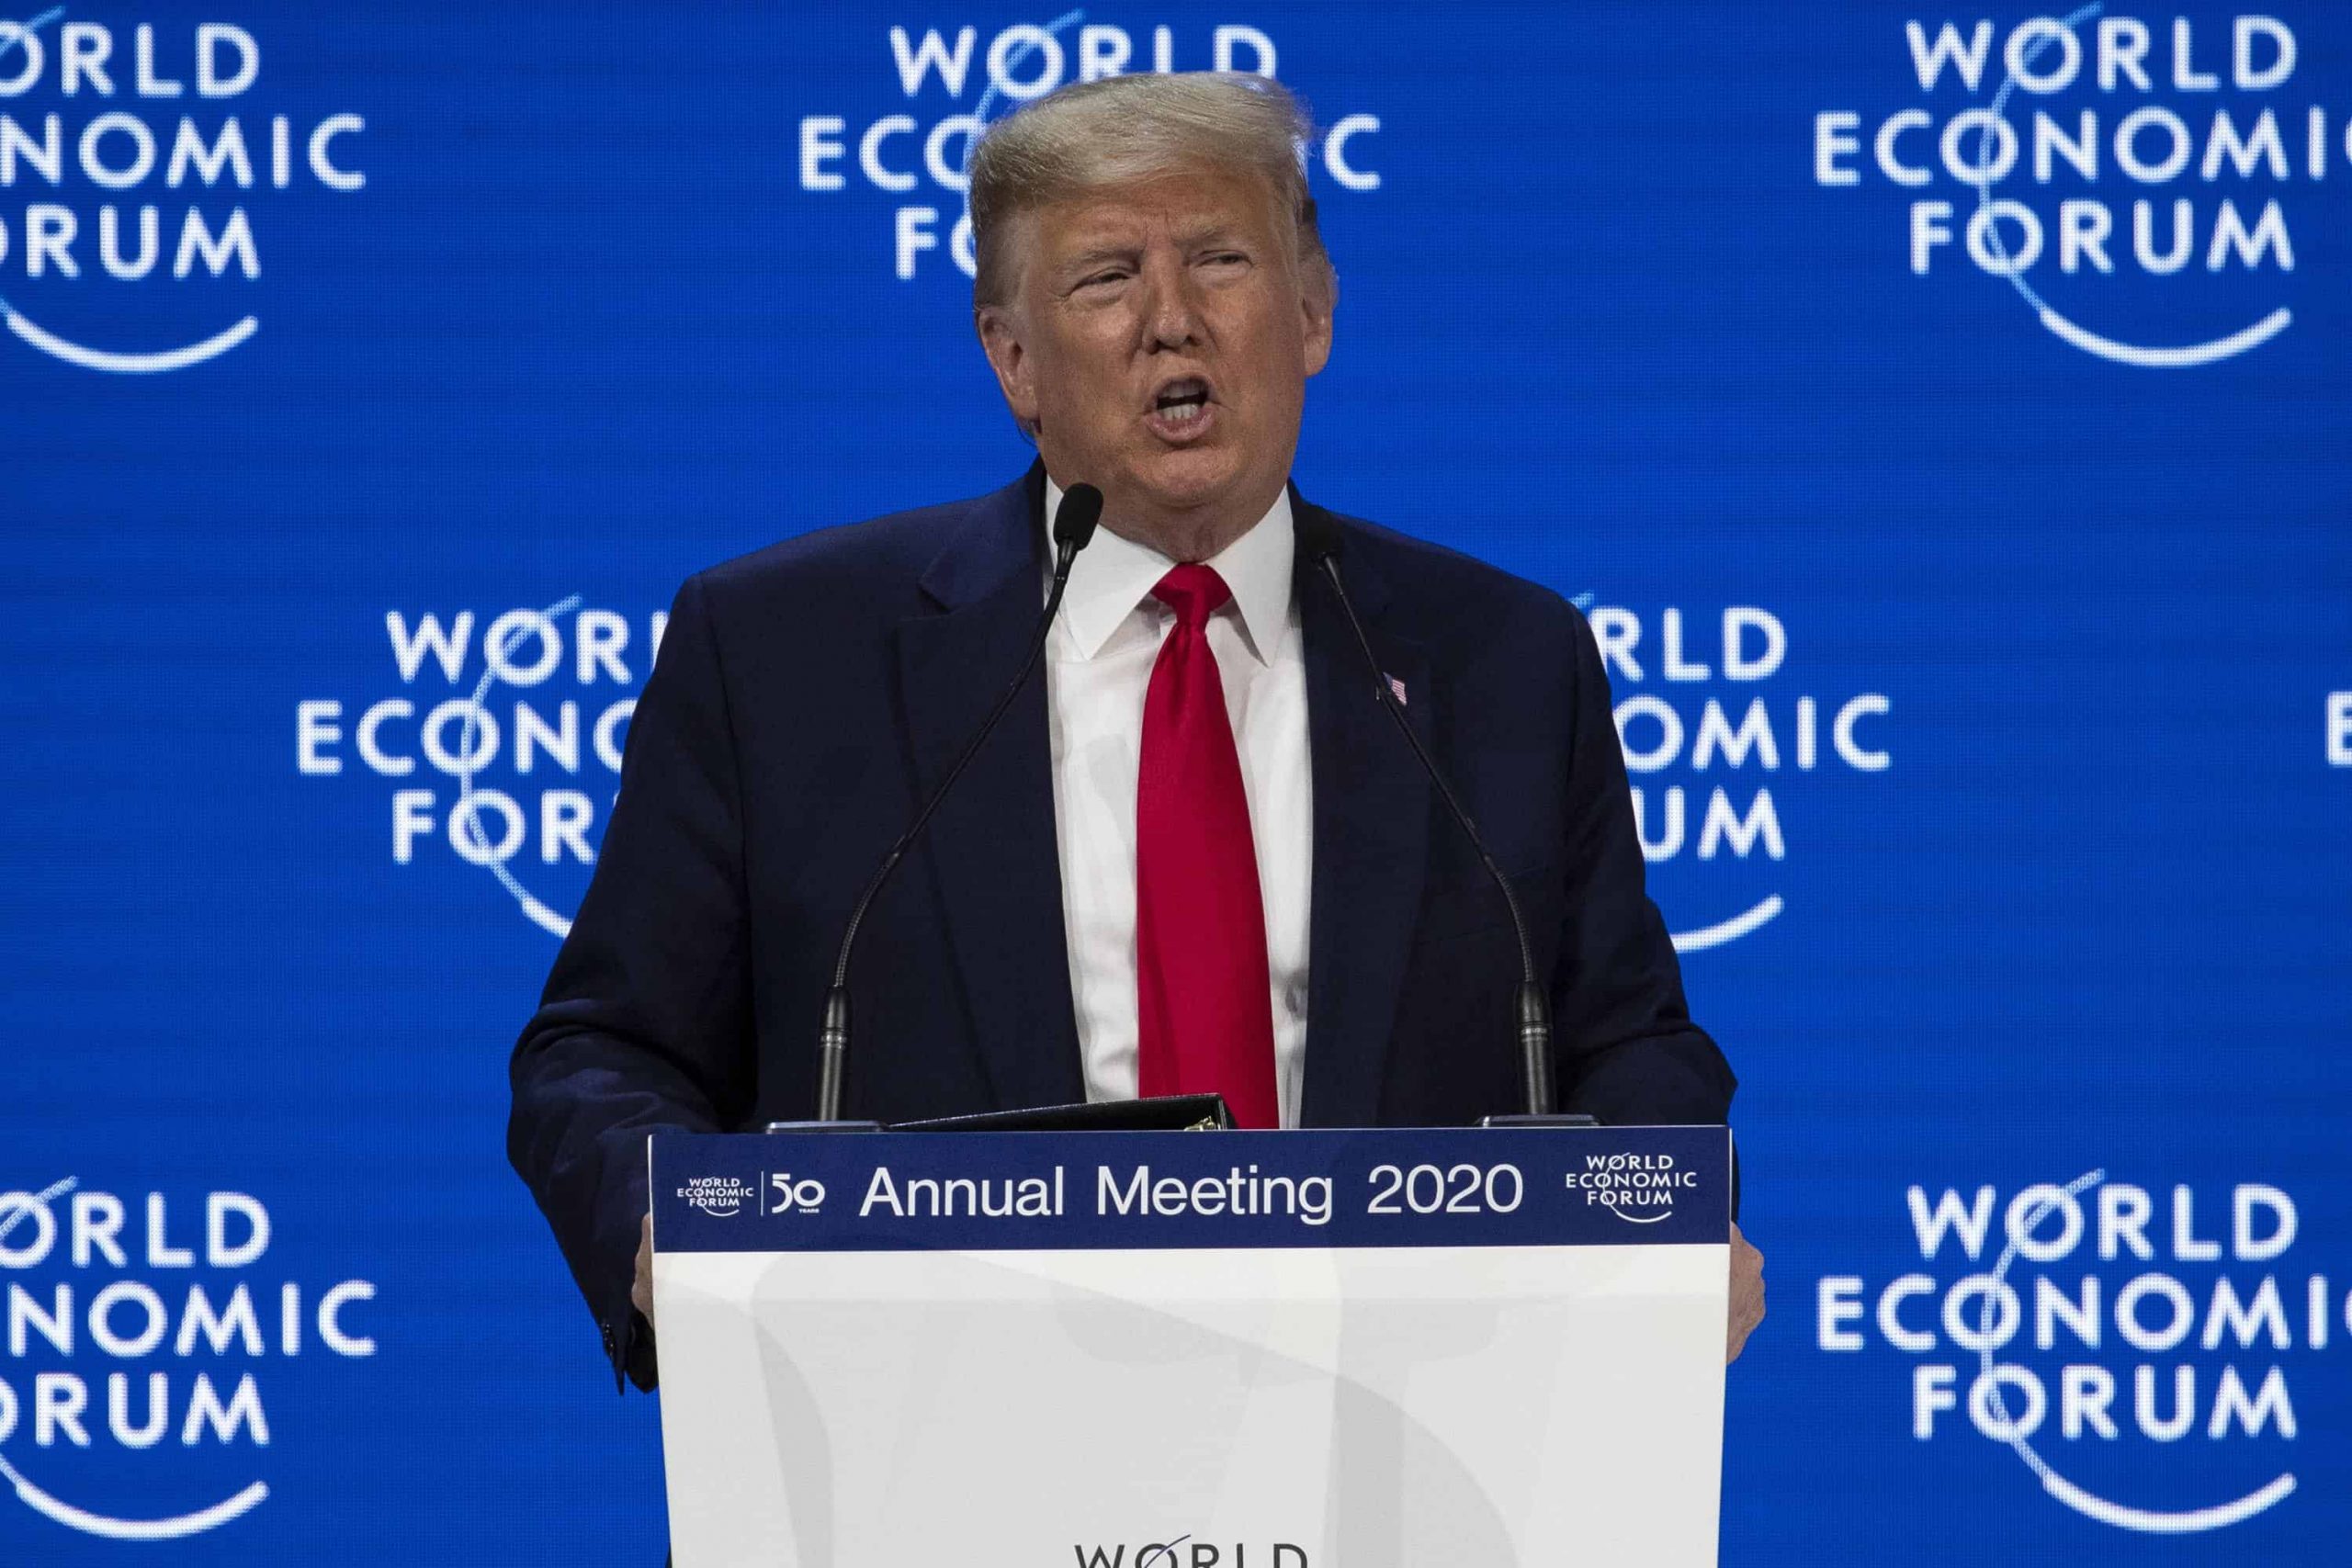 Economist Joseph Stiglitz hits out at Trump’s Davos speech